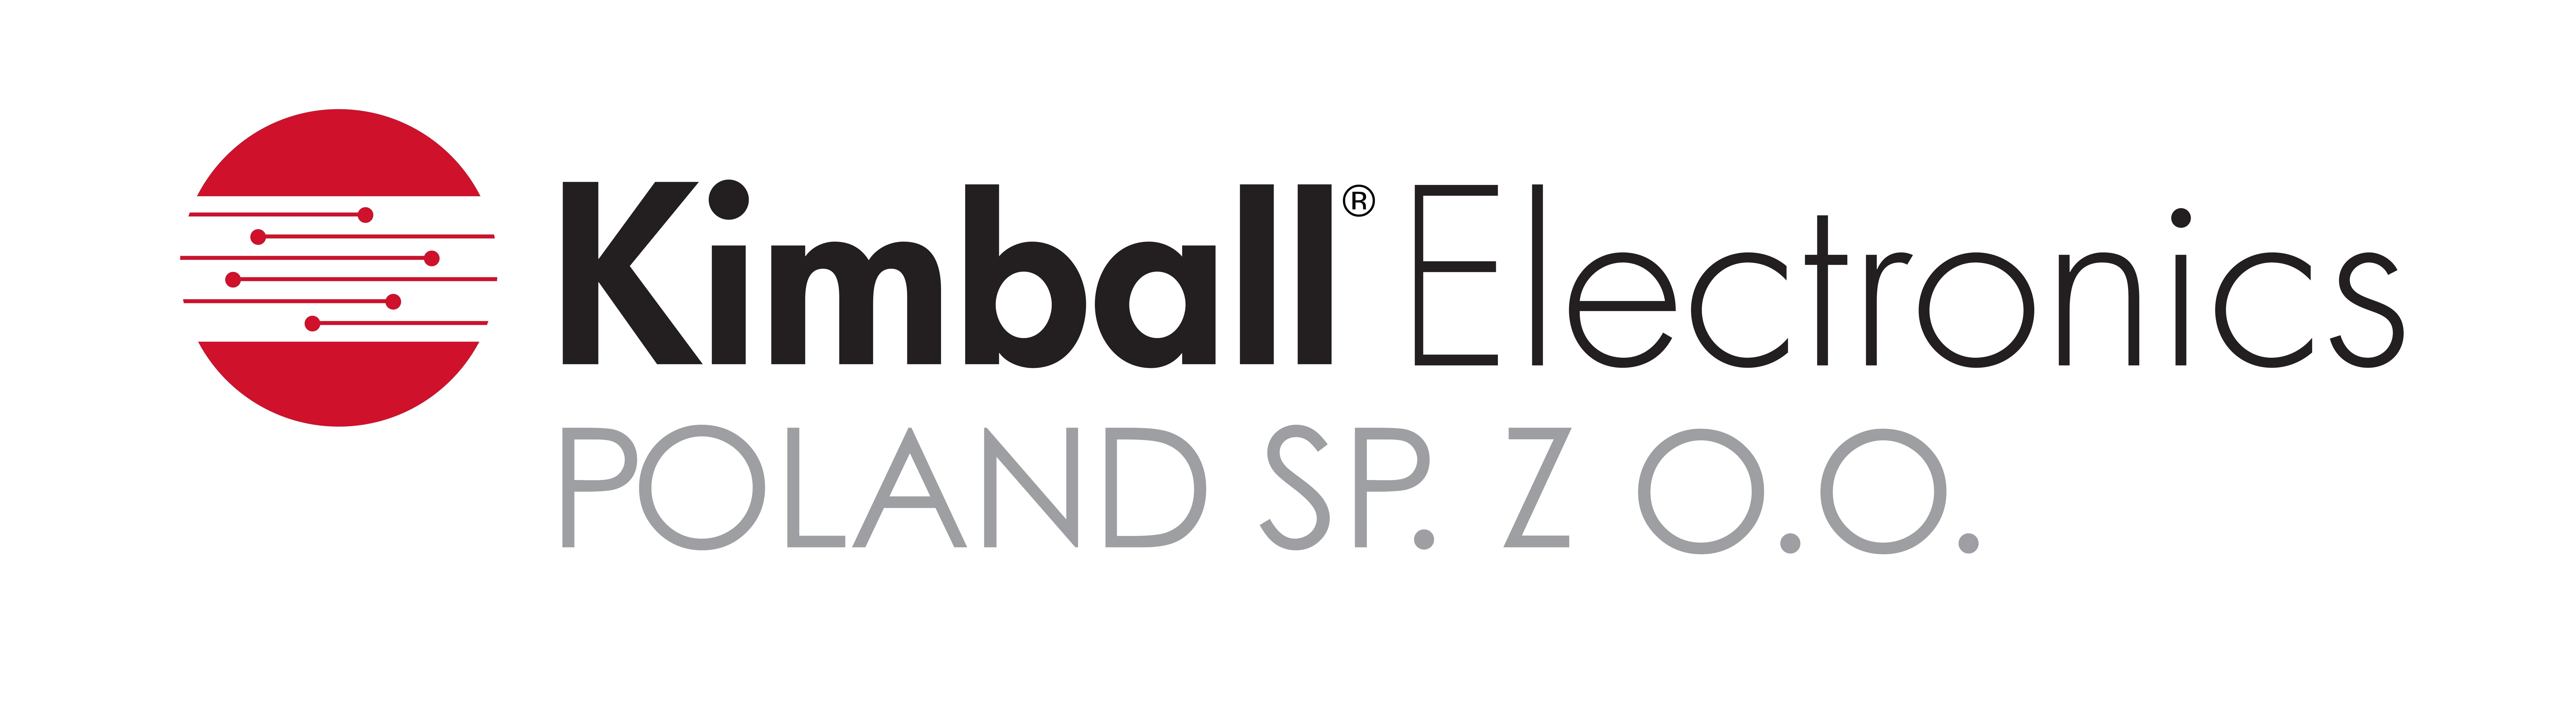 Logo firmy Kimball Electronics Poland sp. z o.o.